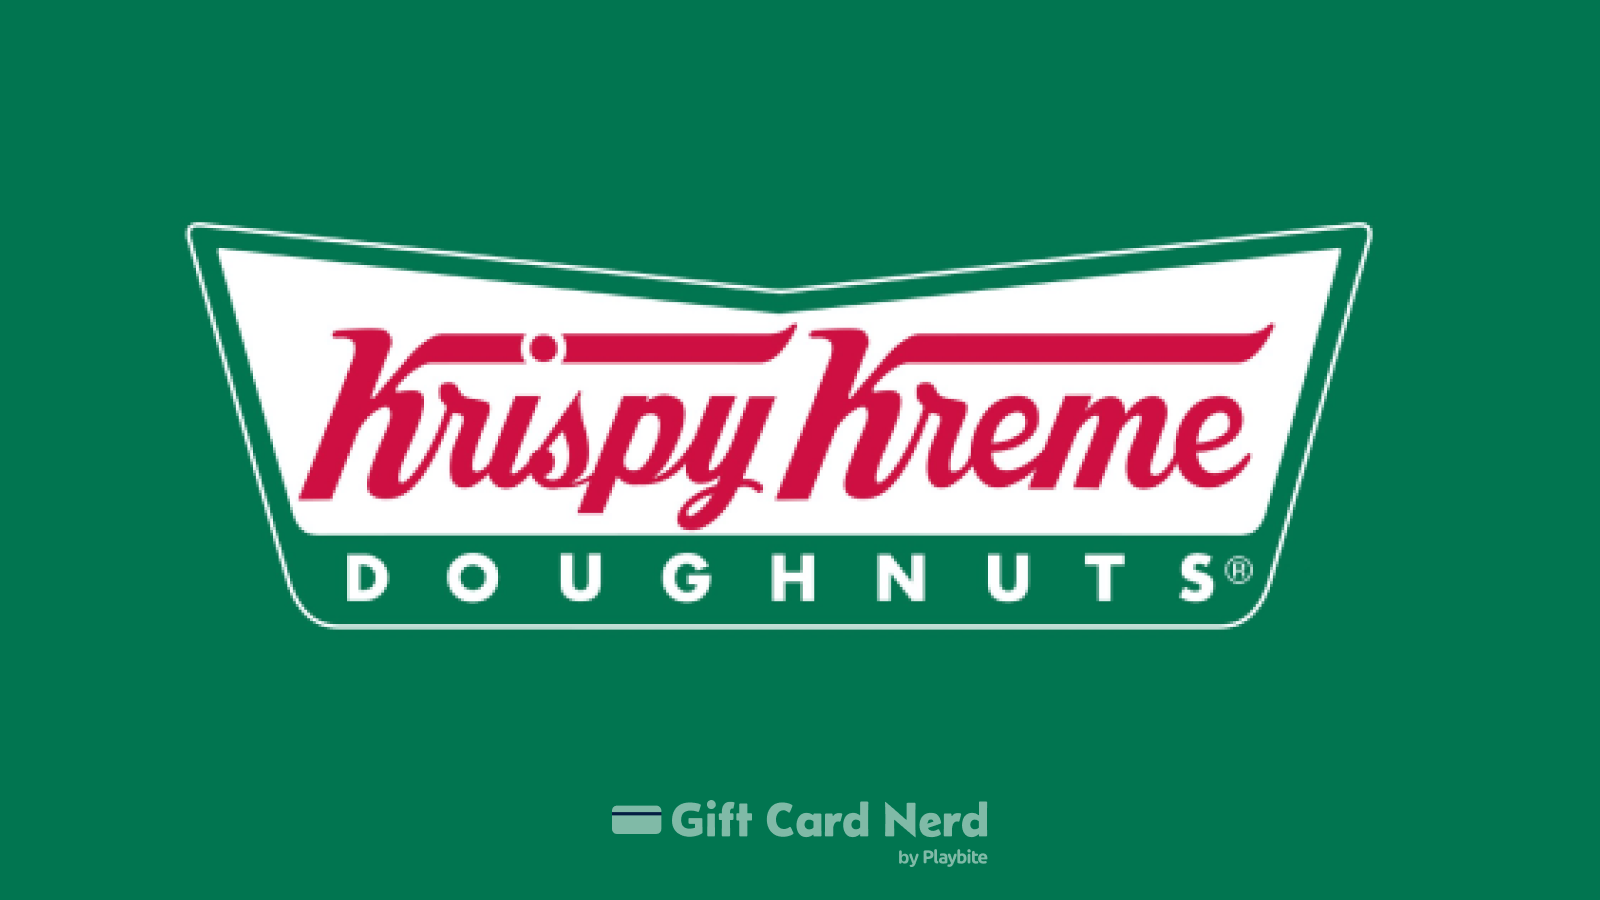 Can I Use a Krispy Kreme Gift Card on Google Play Store?